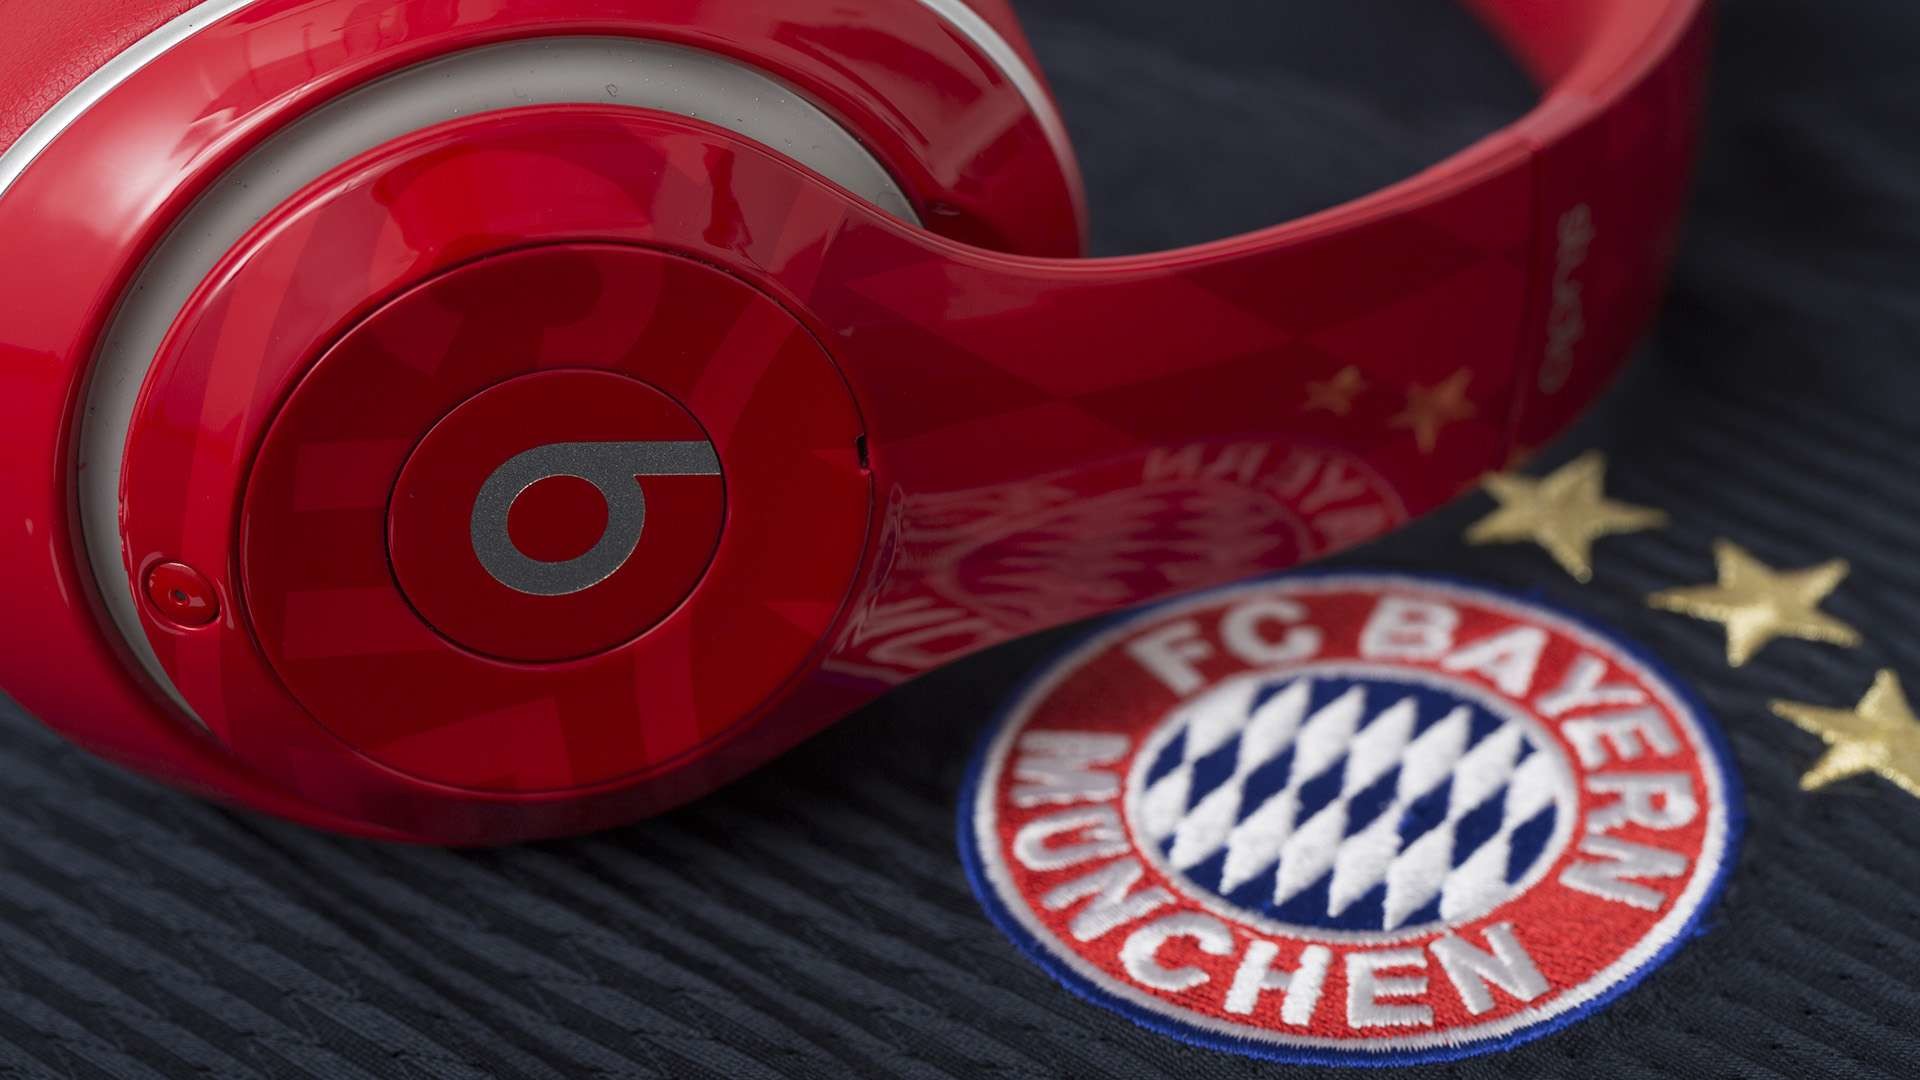 1920x1080 FC Bayern Munich teams up with Beats by Dre